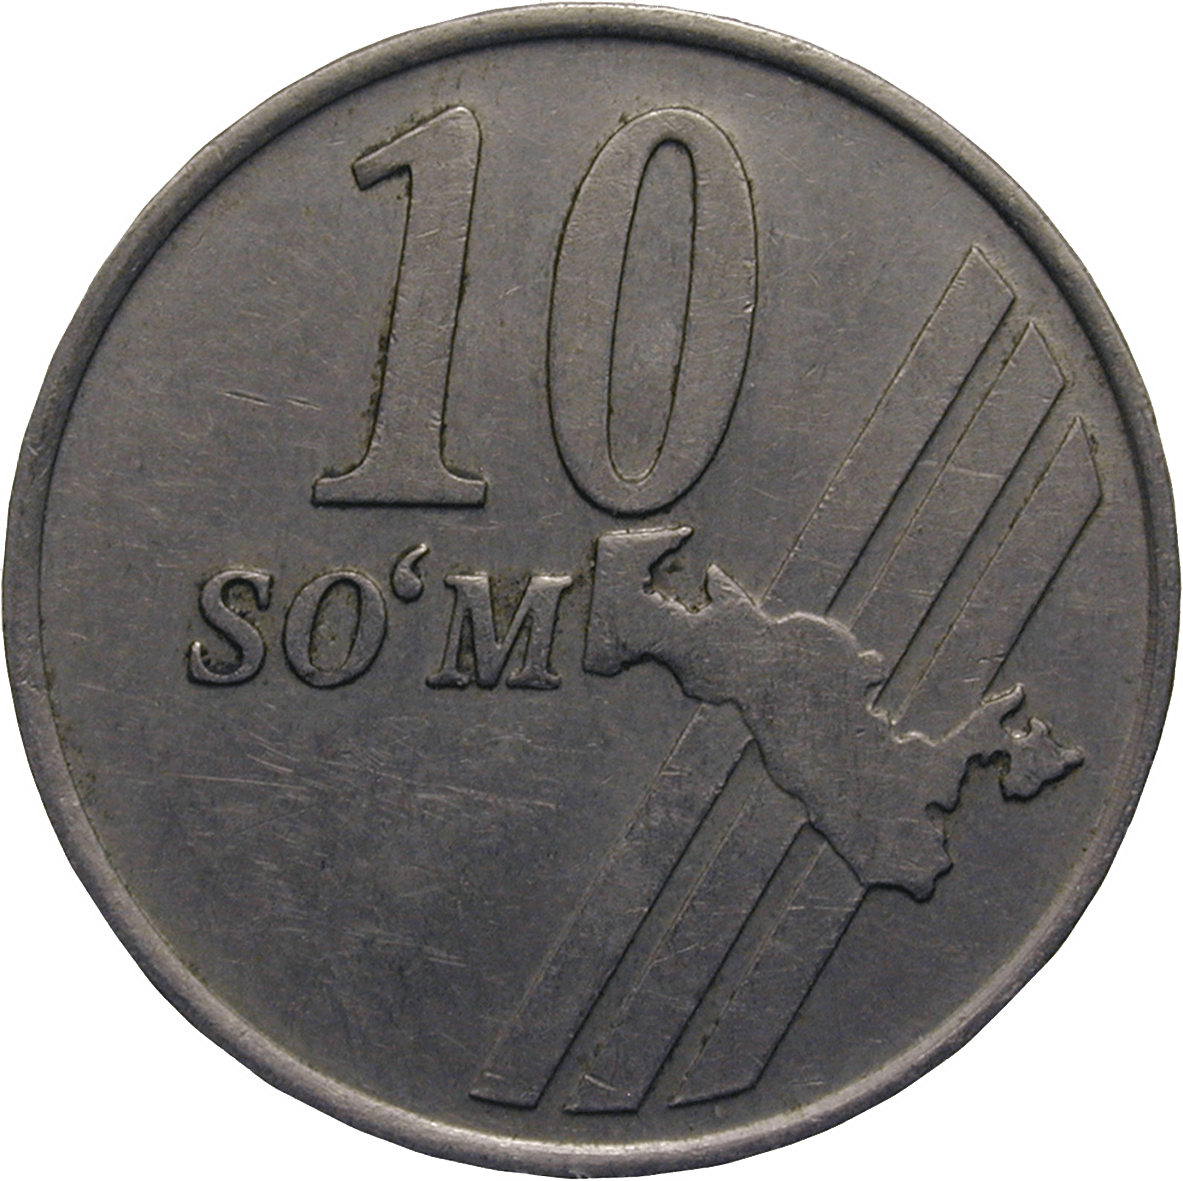 Republic of Uzbekistan, 10 Som 2001 (reverse)